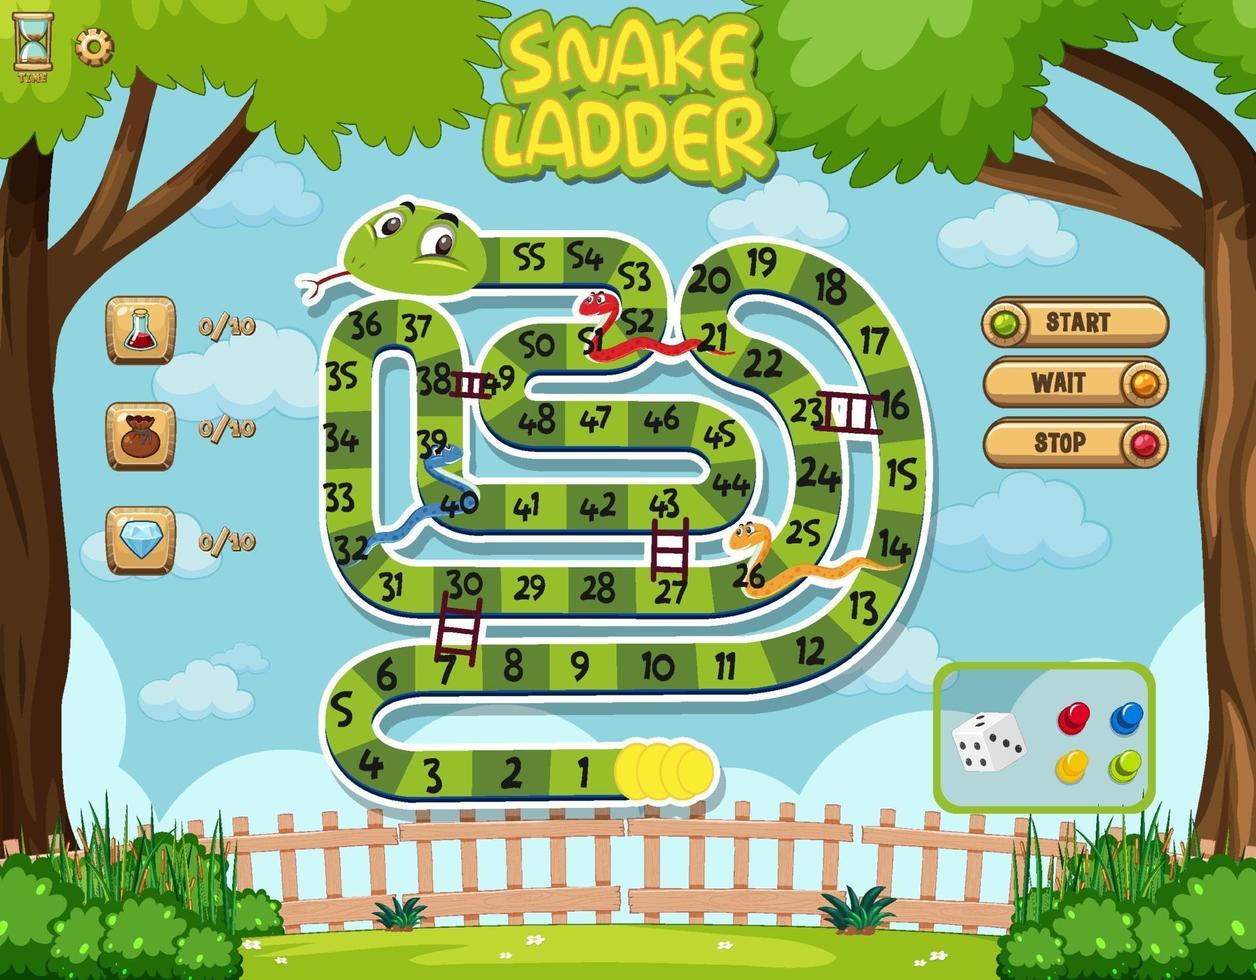 Snake Ladder Board Game for kids template vector